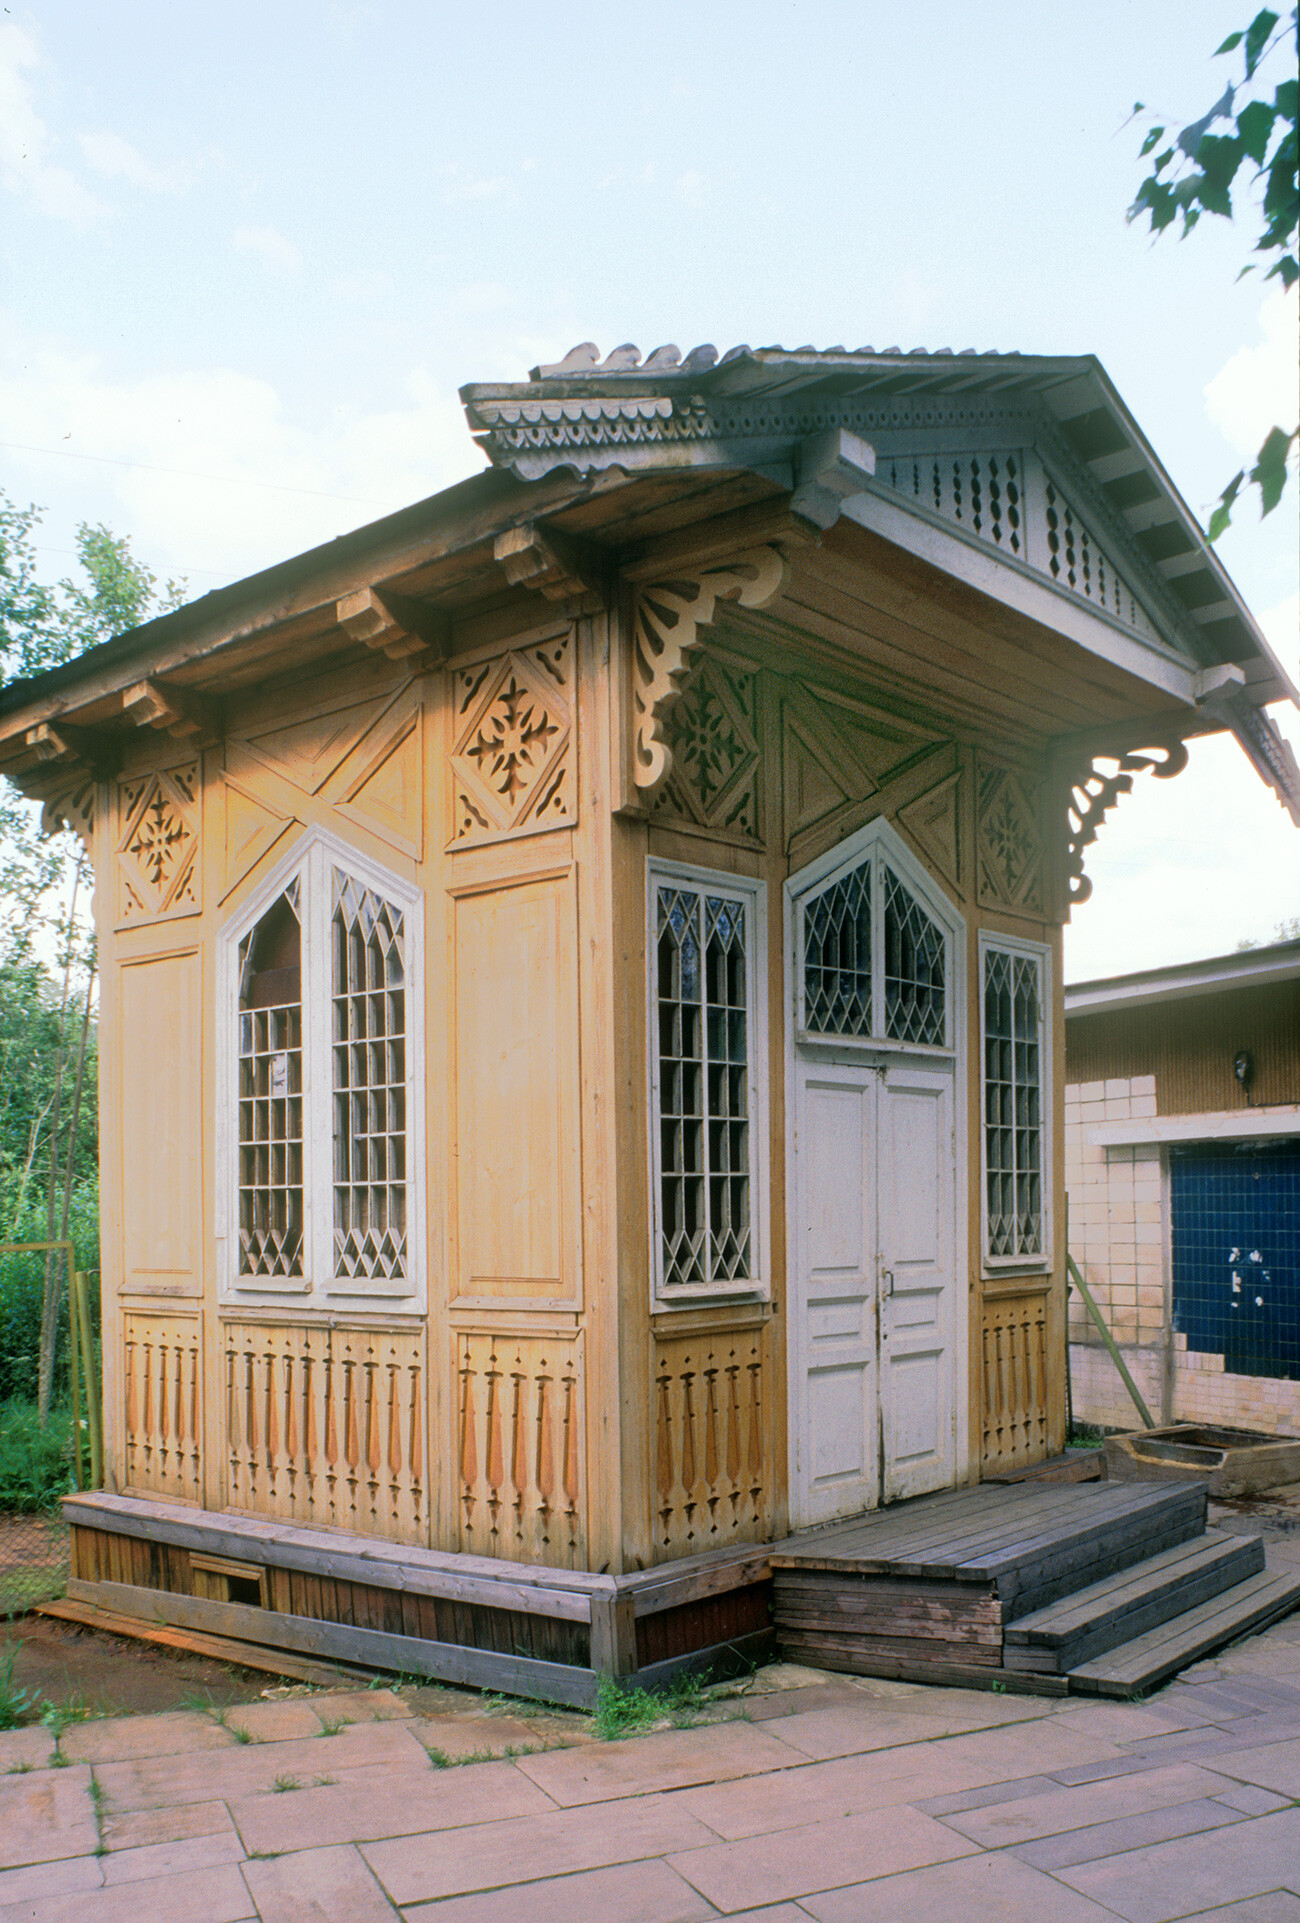 Martsyalnye Vody. Late 19th-century water pavilion. July 4, 2000